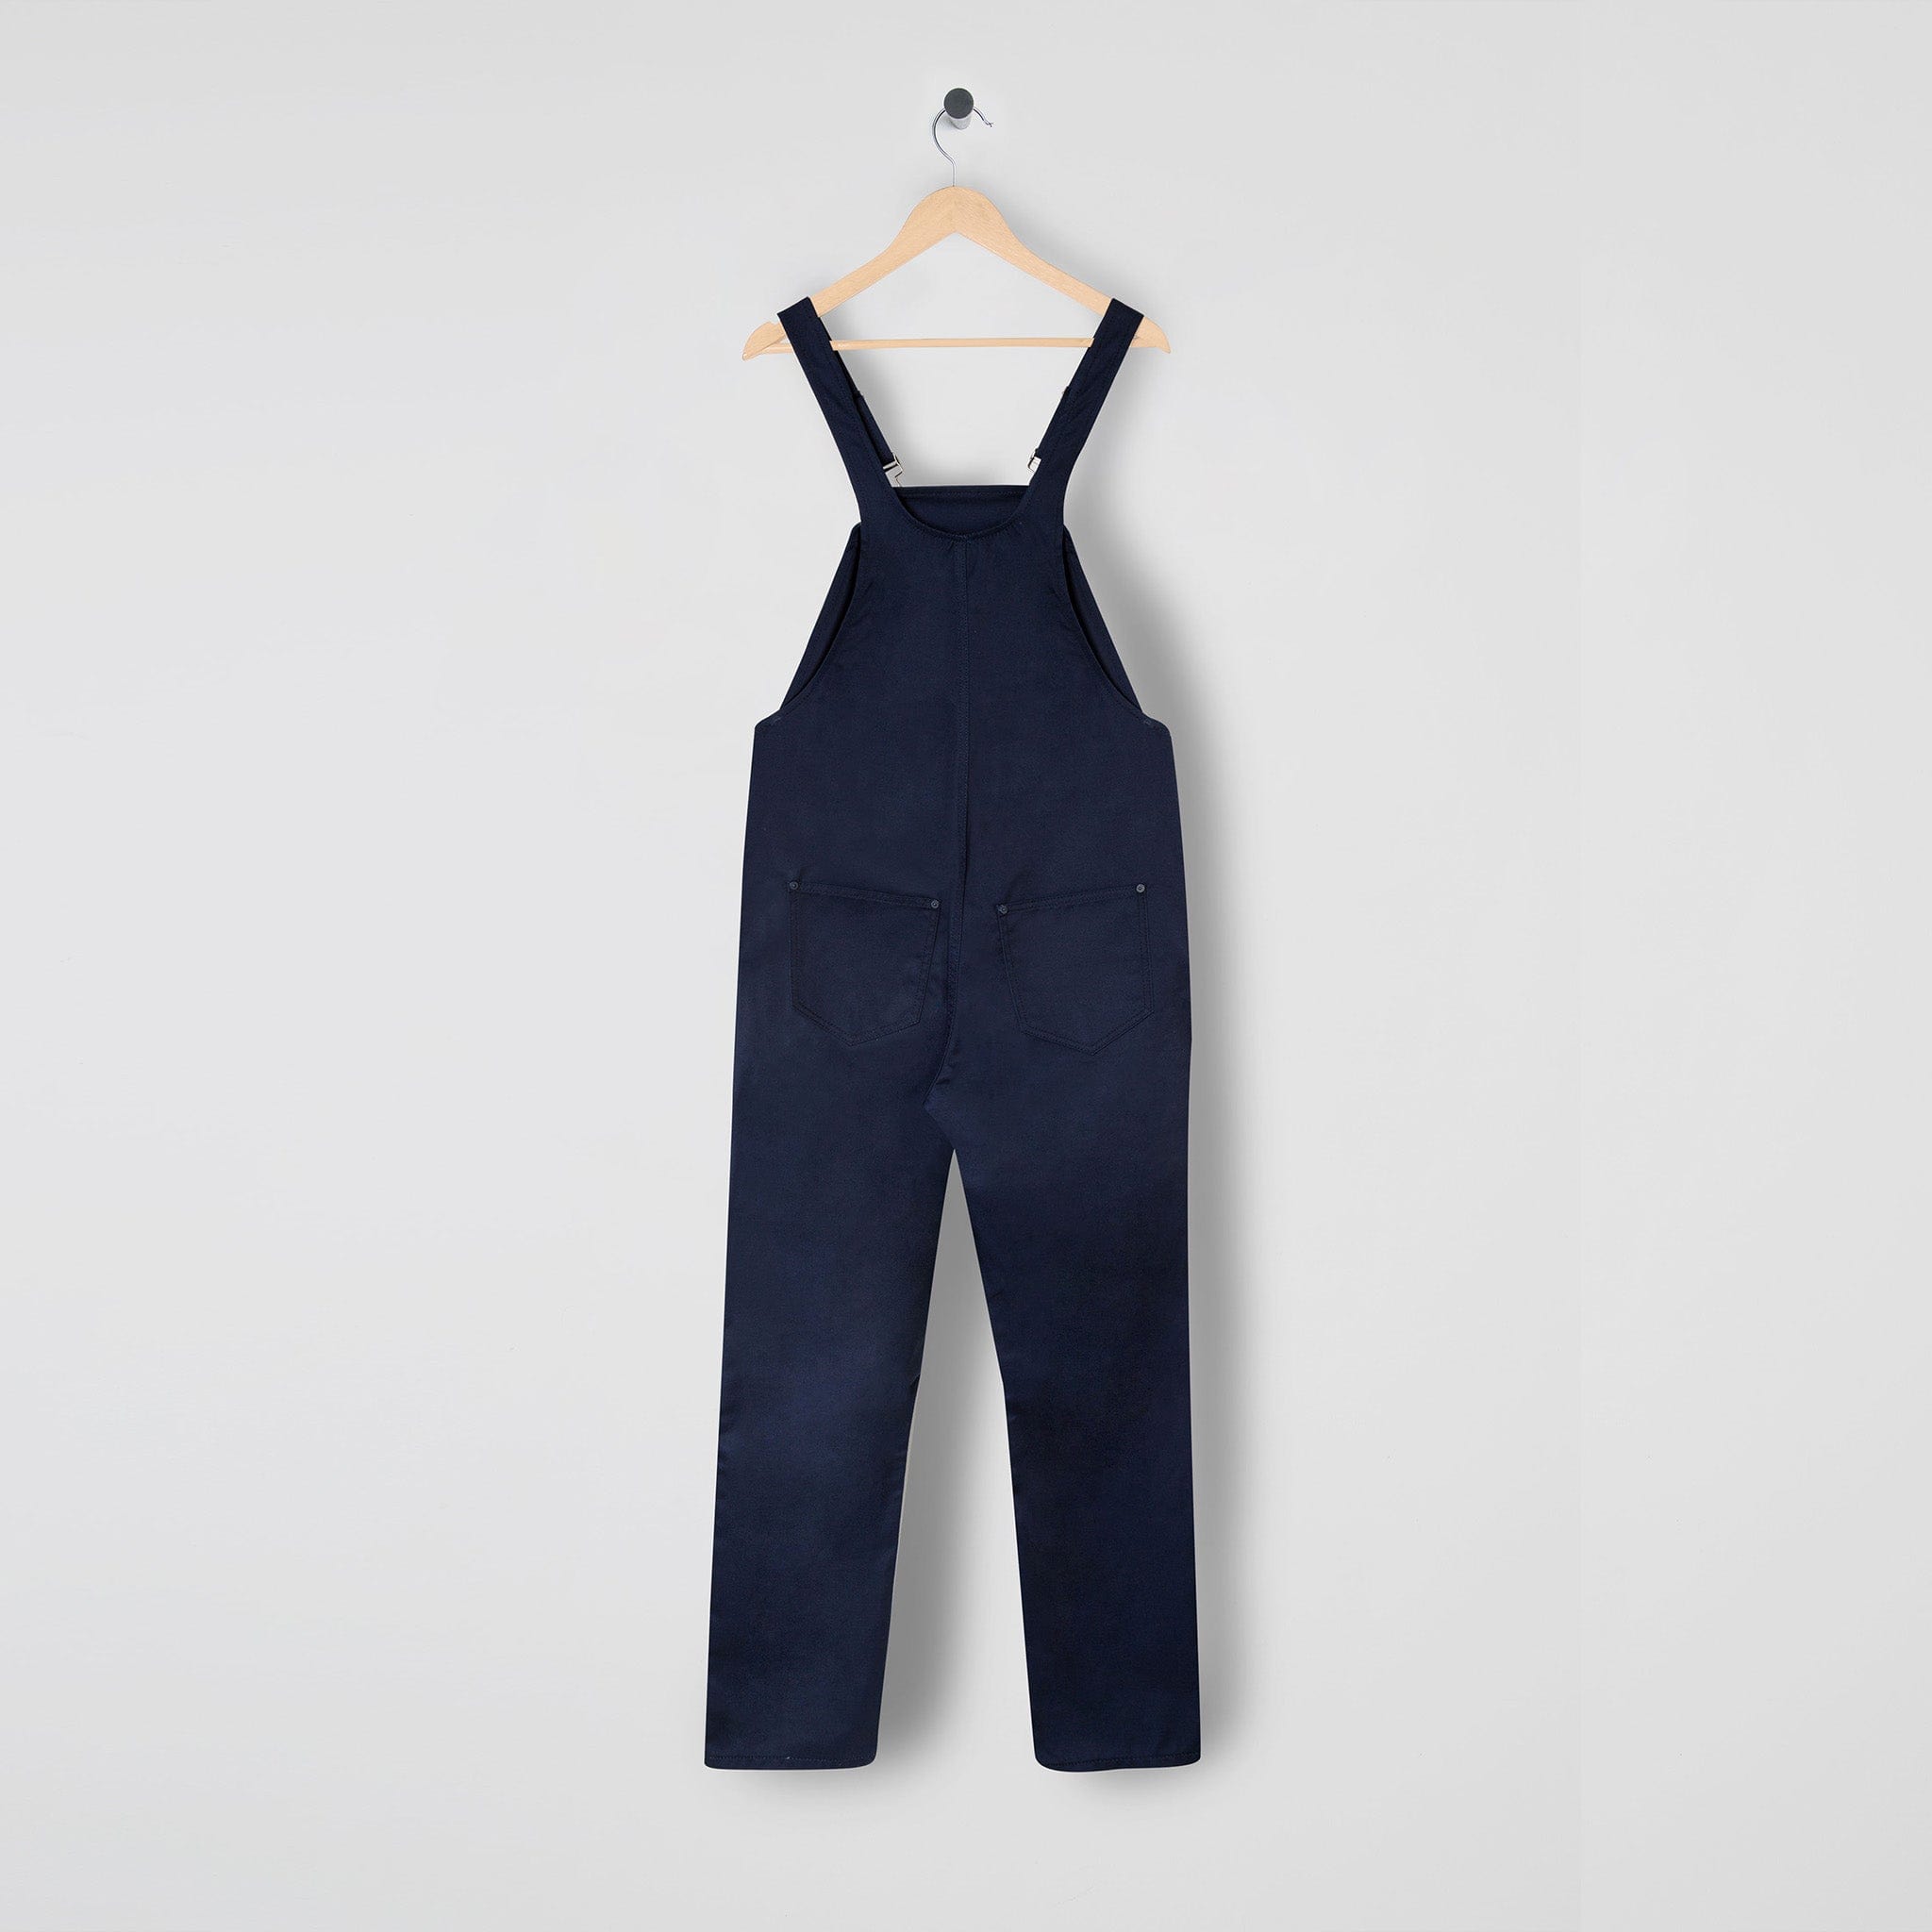 Premium Workwear | Polycotton Navy Dungaree – M.C.Overalls